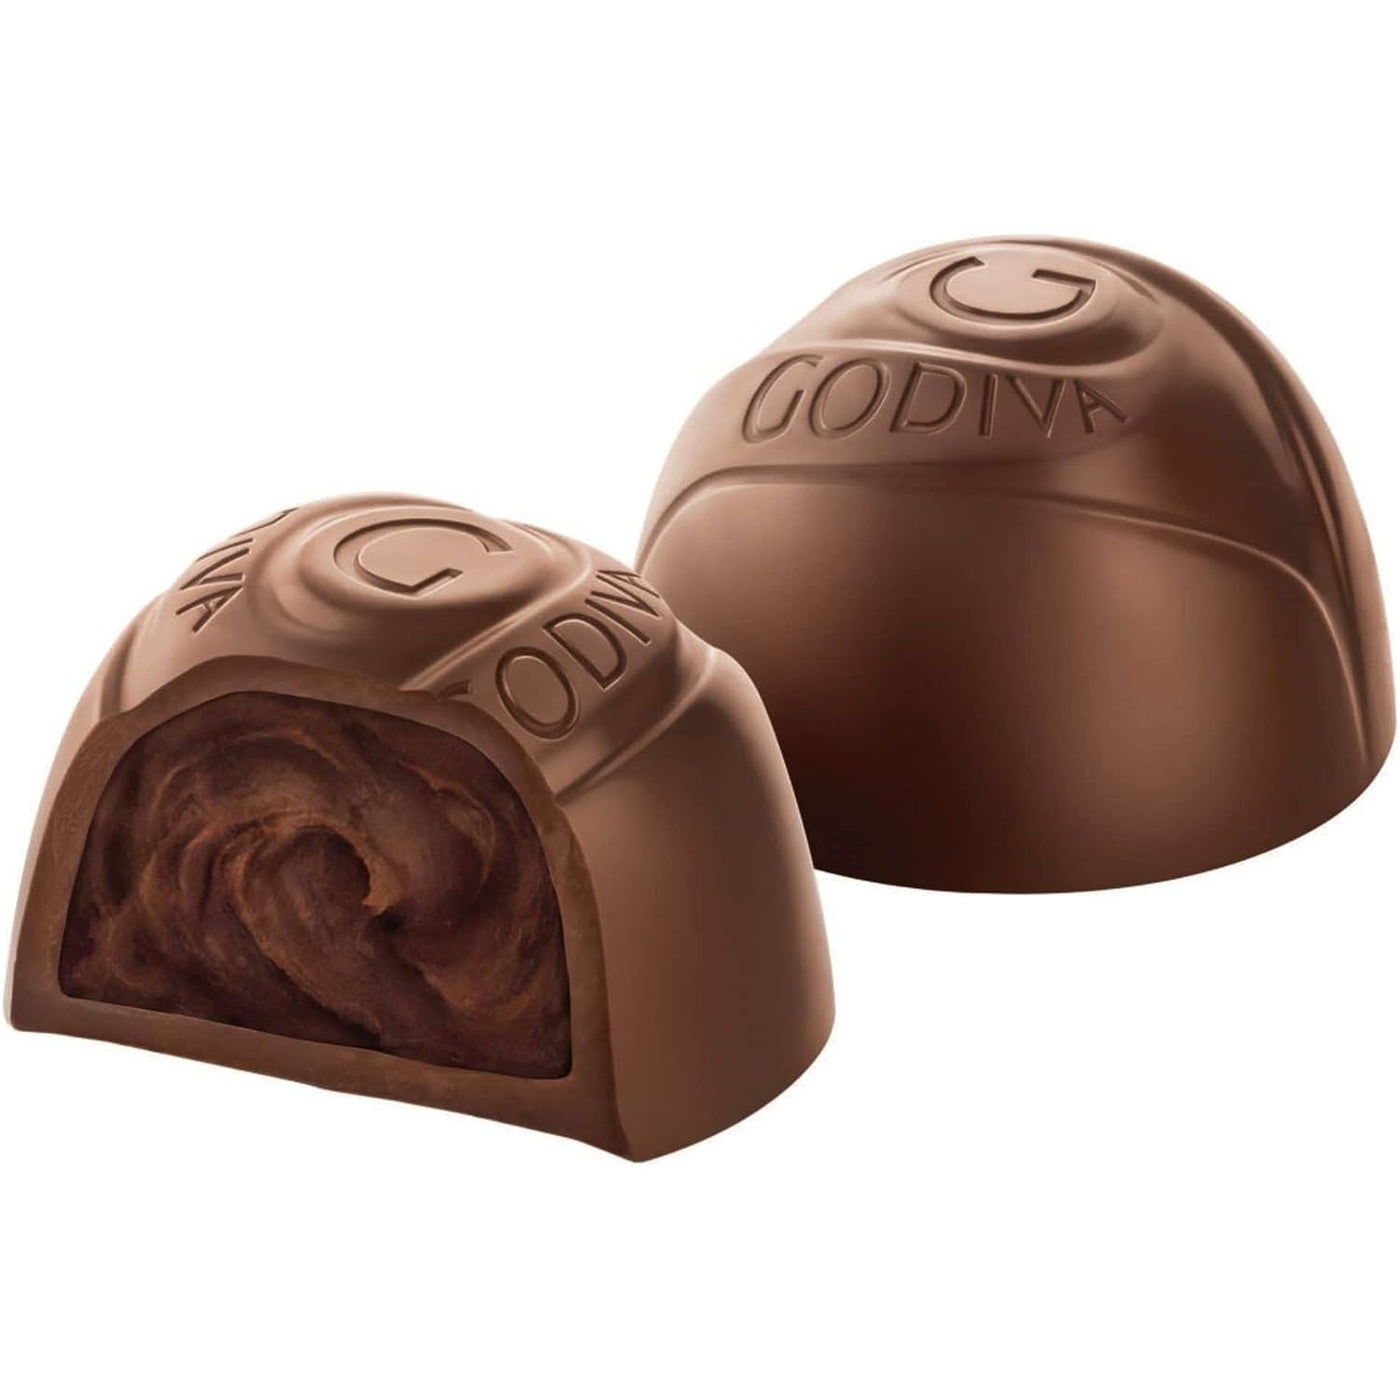 Godiva Chocolatier Wrapped Milk Chocolate Truffles, 174g - Just Closeouts Canada Inc.031290075904